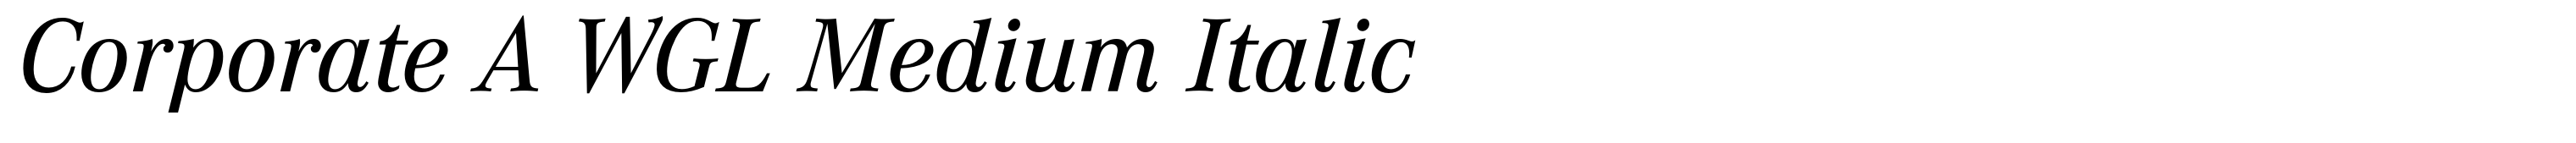 Corporate A WGL Medium Italic